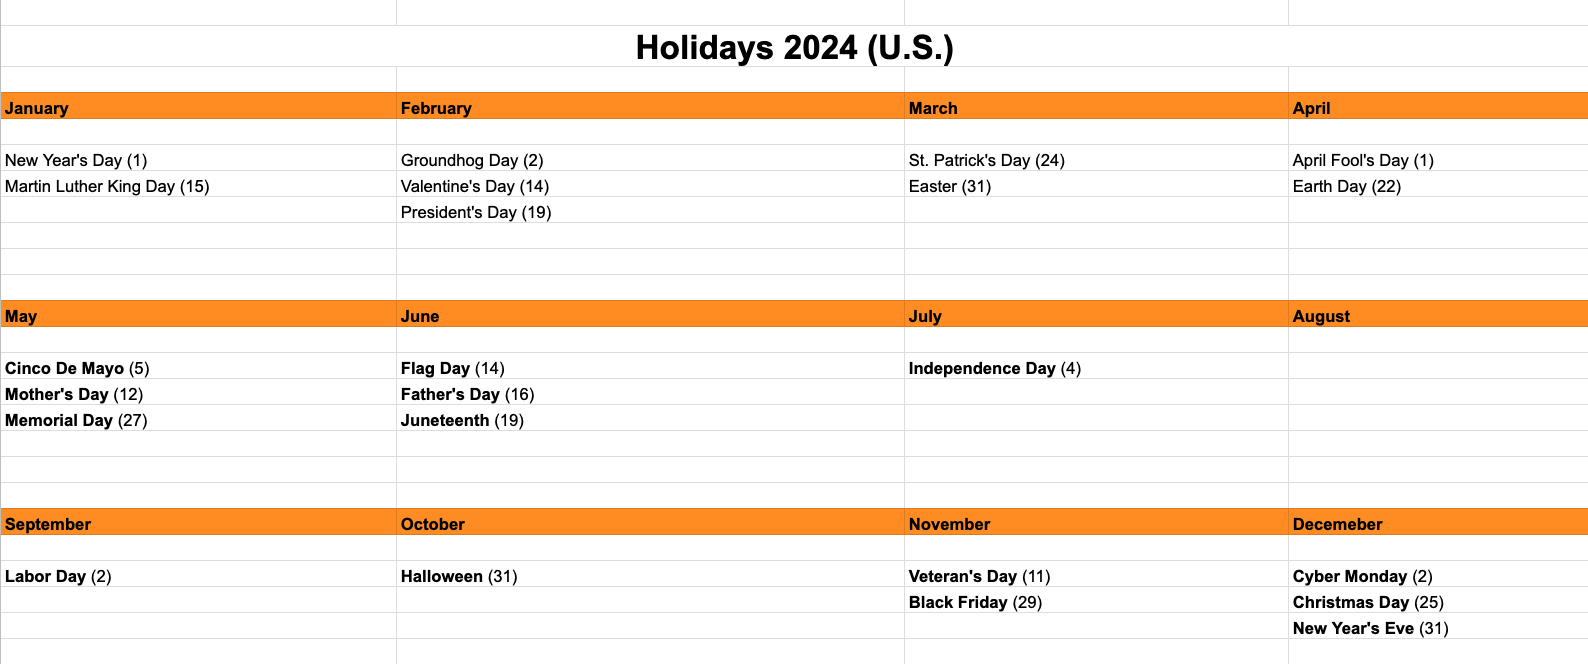 Holiday Marketing Calendar Template for 2024 (U.S.)